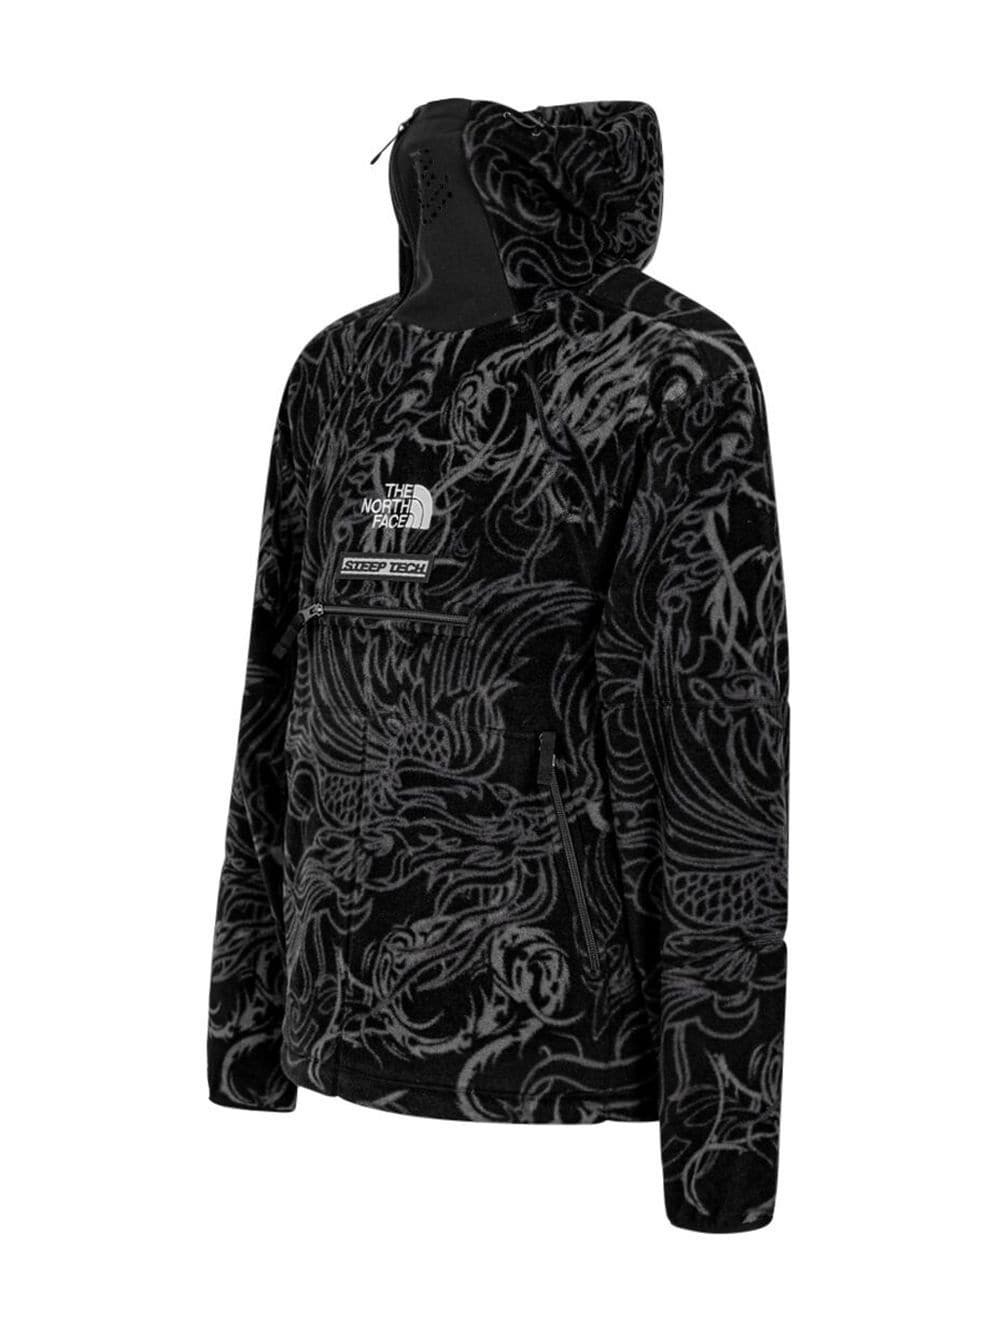 Supreme x The North Face Steep Tech fleece sweatshirt | REVERSIBLE